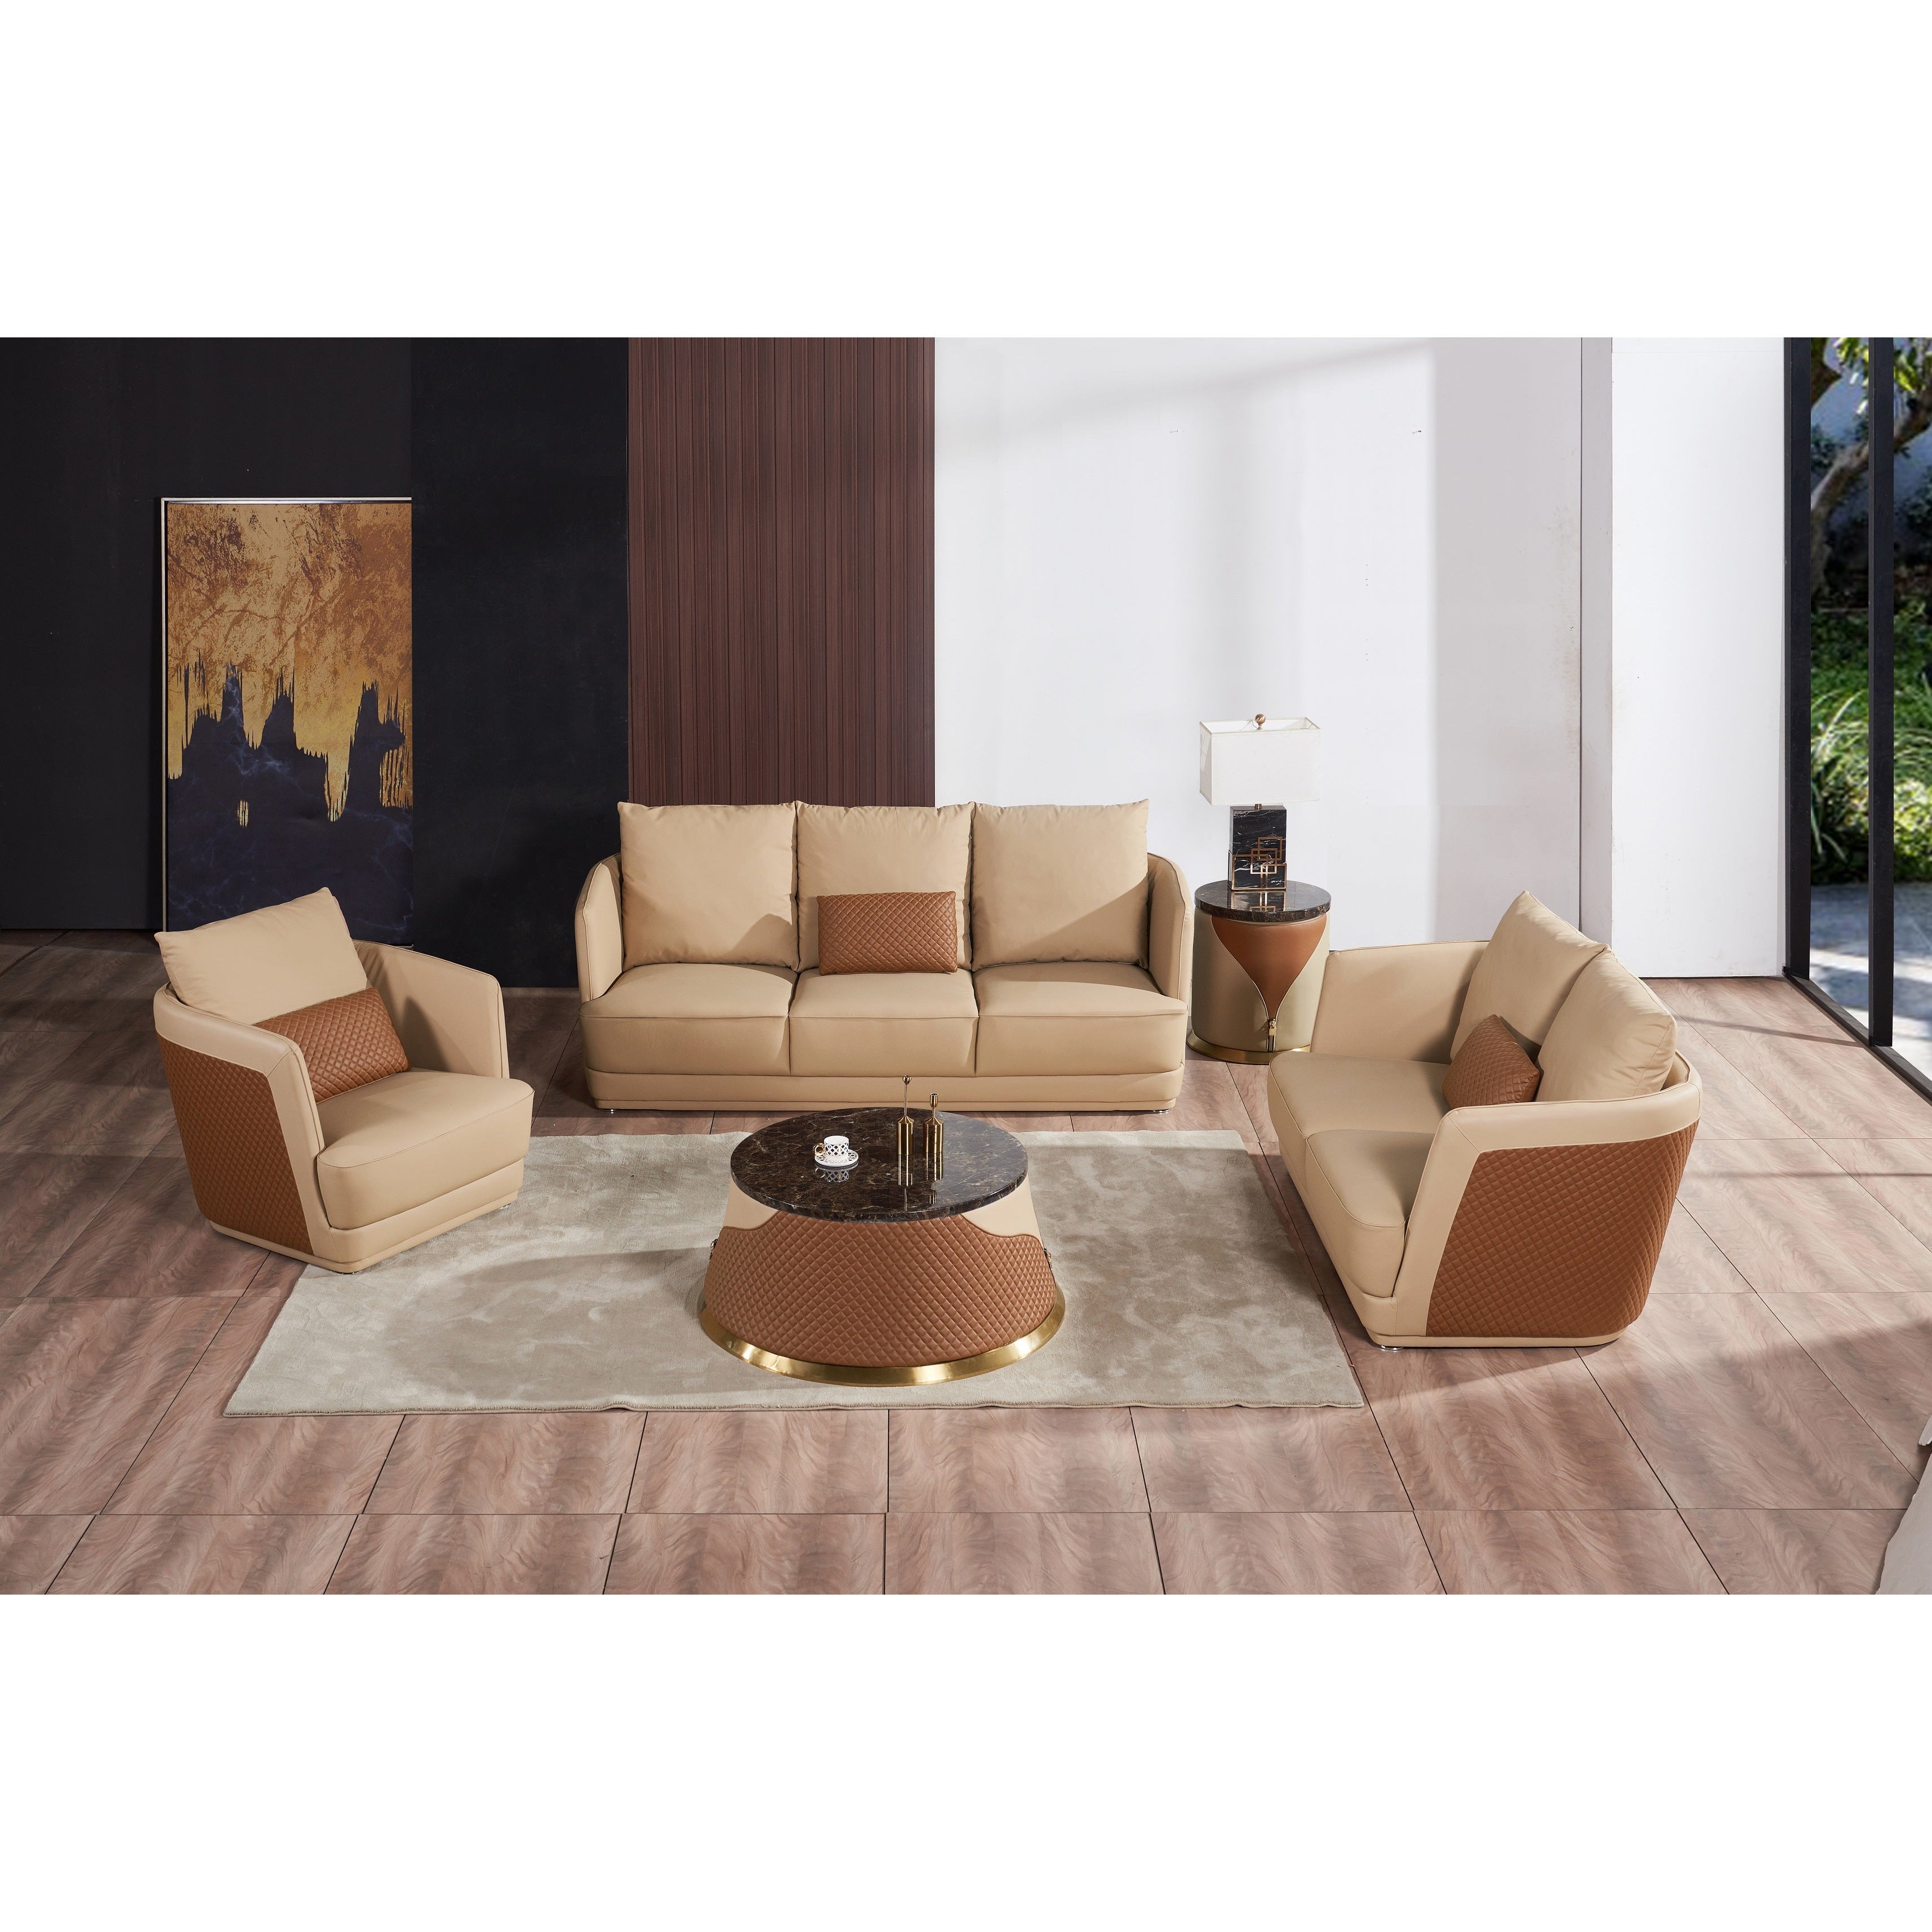 European Furniture - Glamour Loveseat Tan & Brown Italian Leather - EF-51617-L - New Star Living